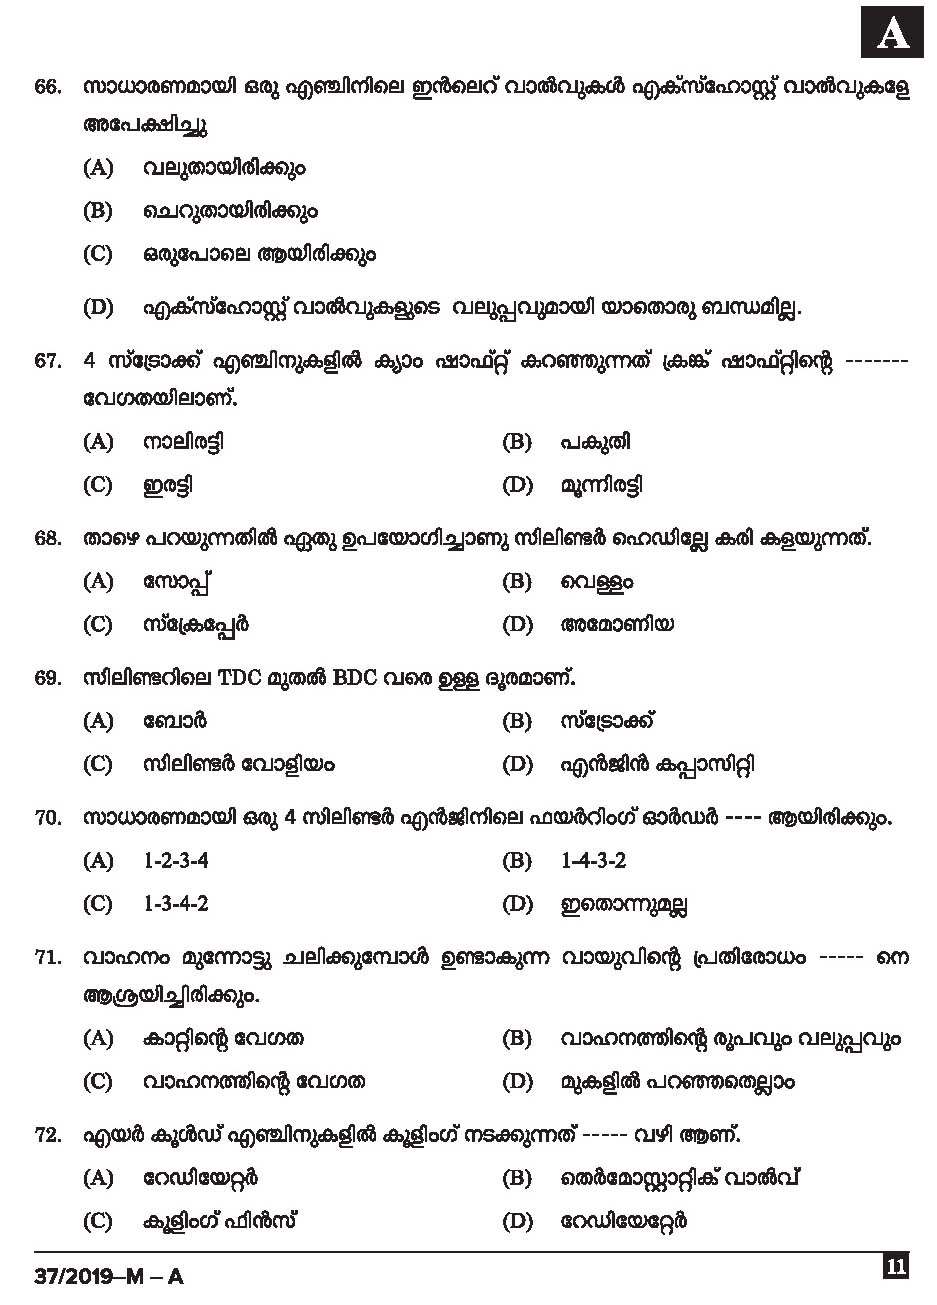 KPSC Driver and Office Attendant Malayalam Exam 2019 Code 372019 M 10